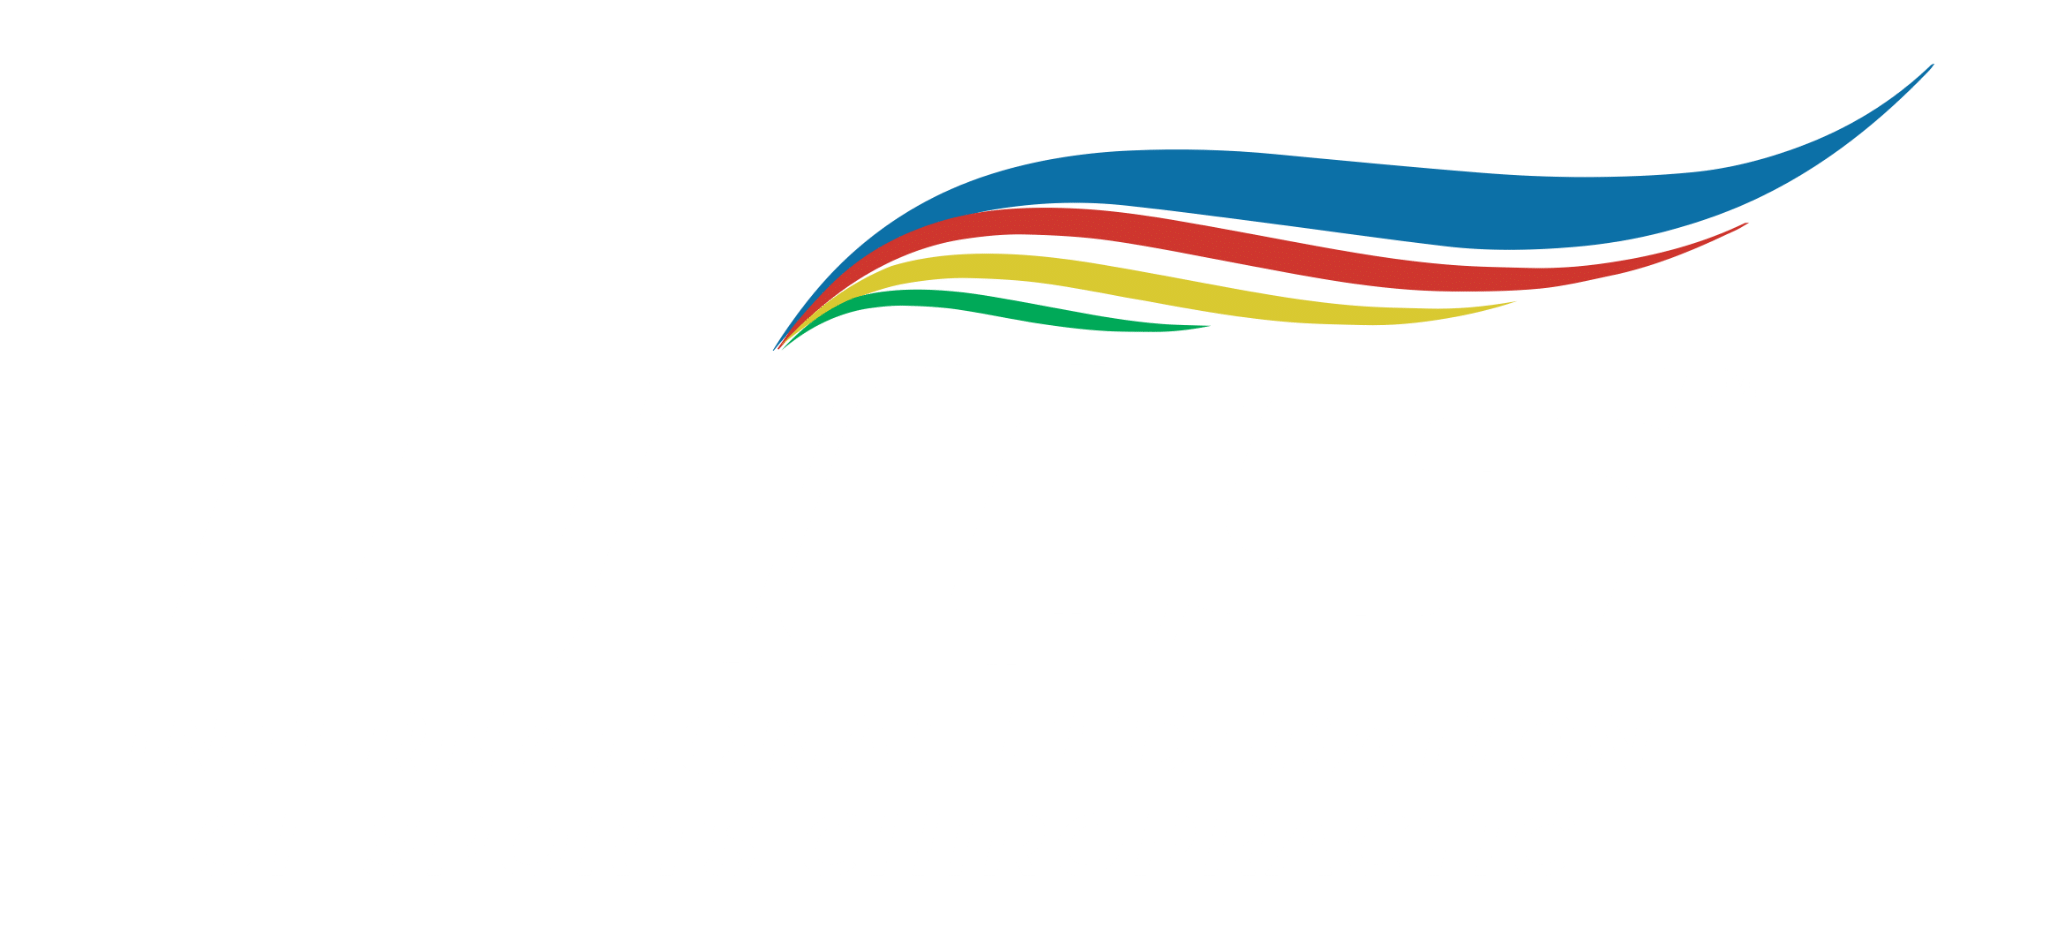 International Federation of Sports Chiropractors